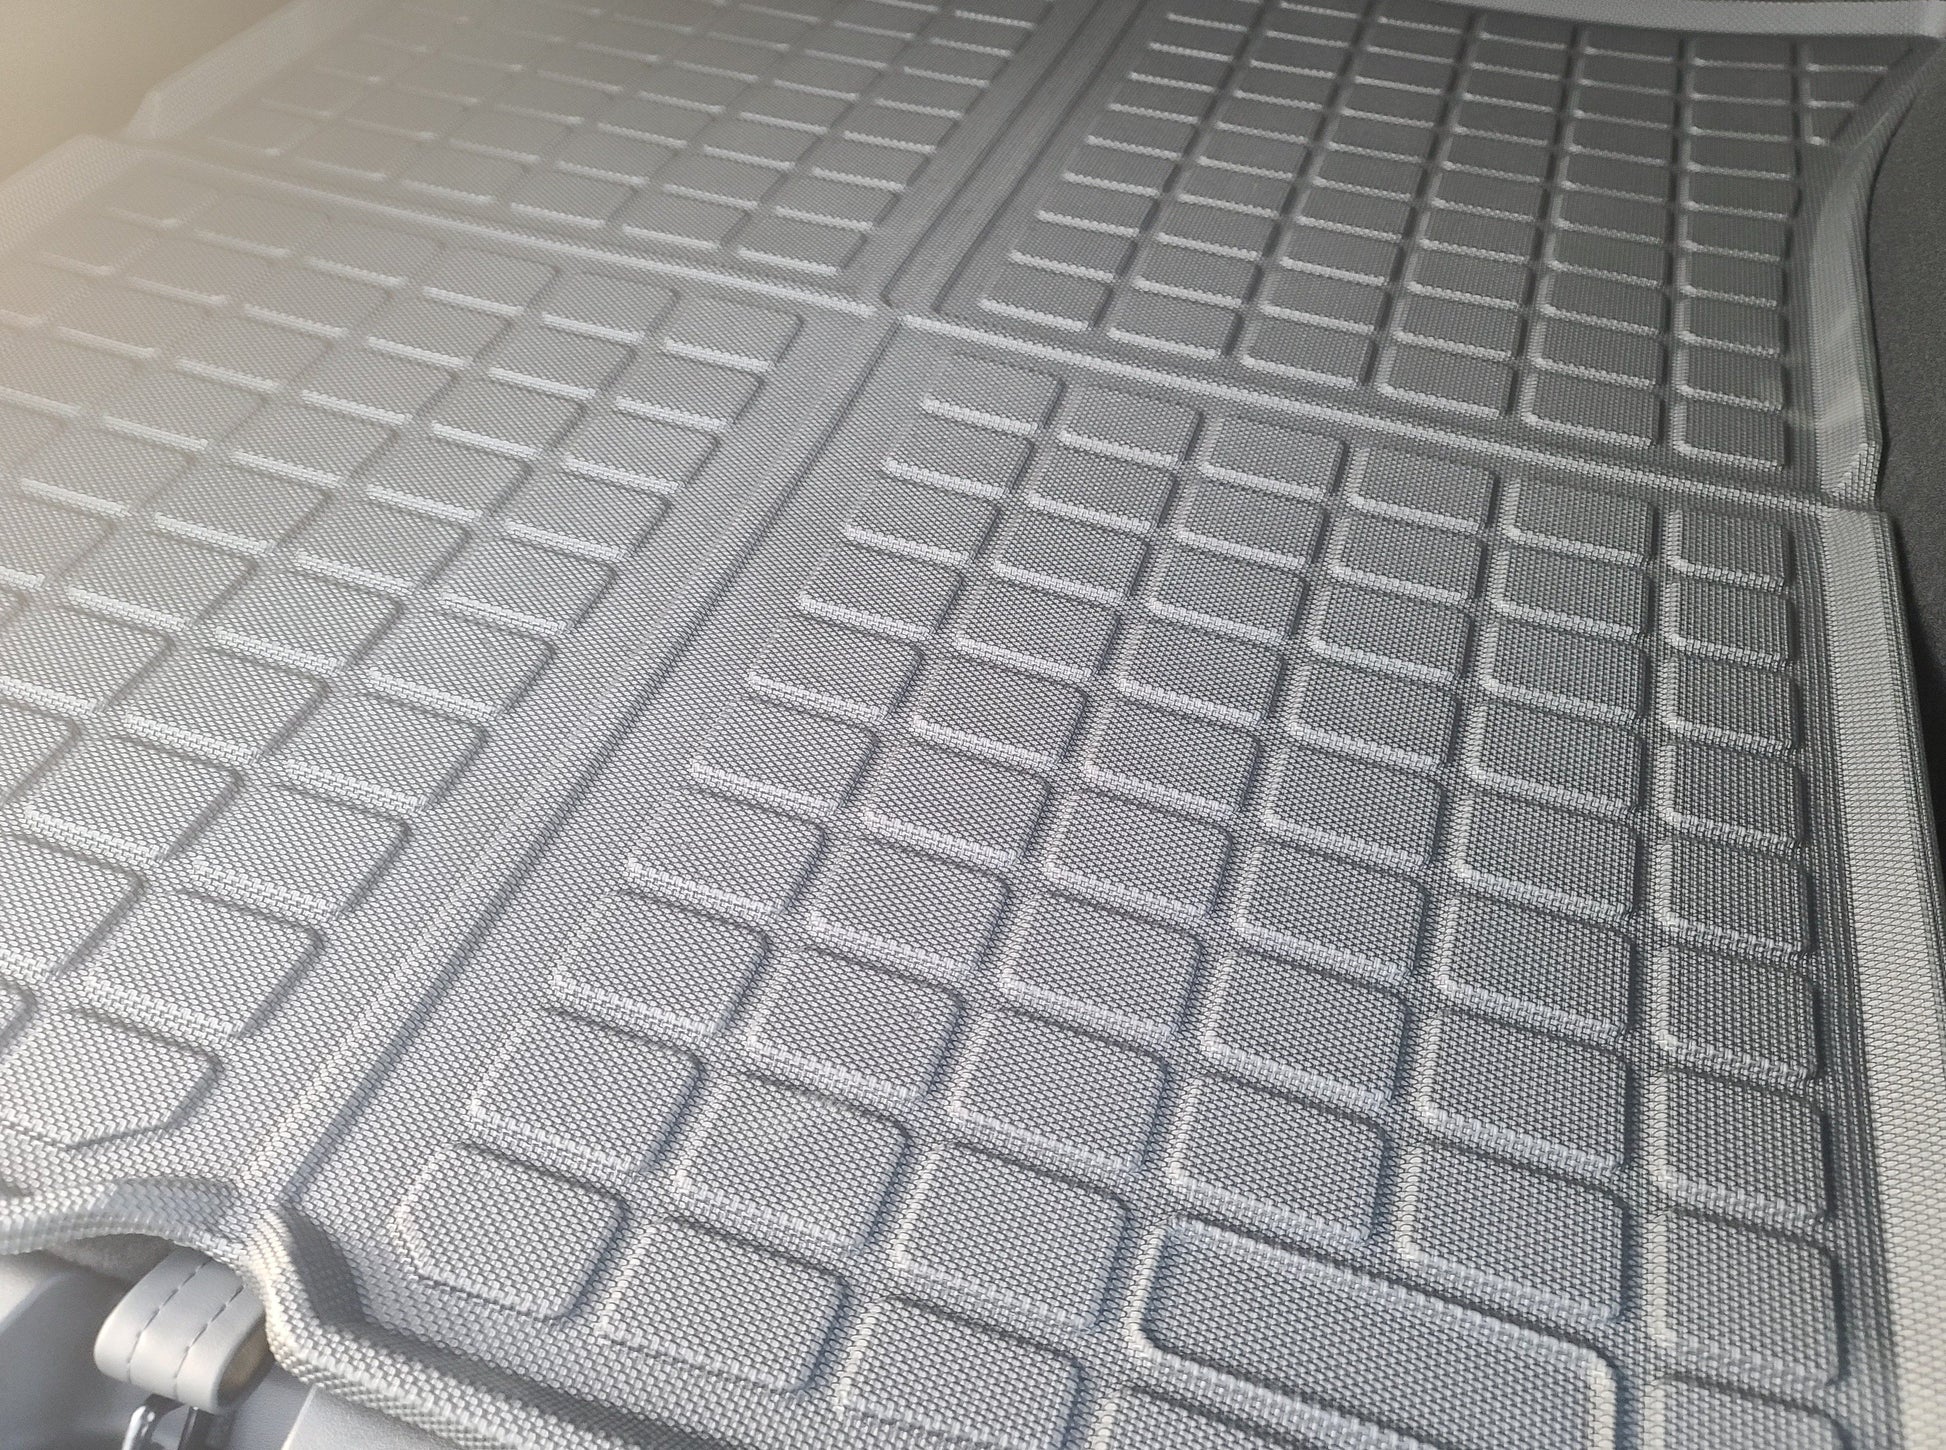 Model Y rubber mats 6-piece complete set floor mats, frunk and trunk